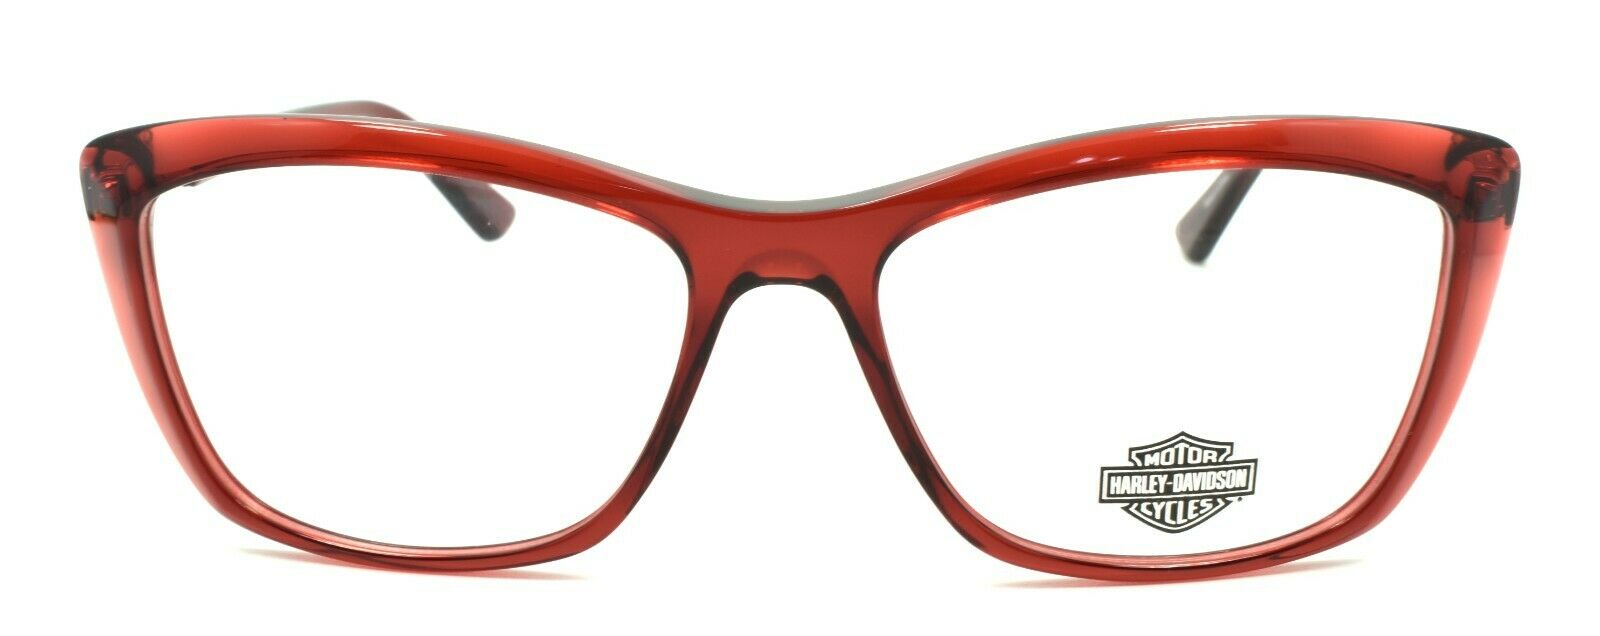 2-Harley Davidson HD0548 069 Women's Eyeglasses Frames 54-16-140 Bordeaux-889214036087-IKSpecs